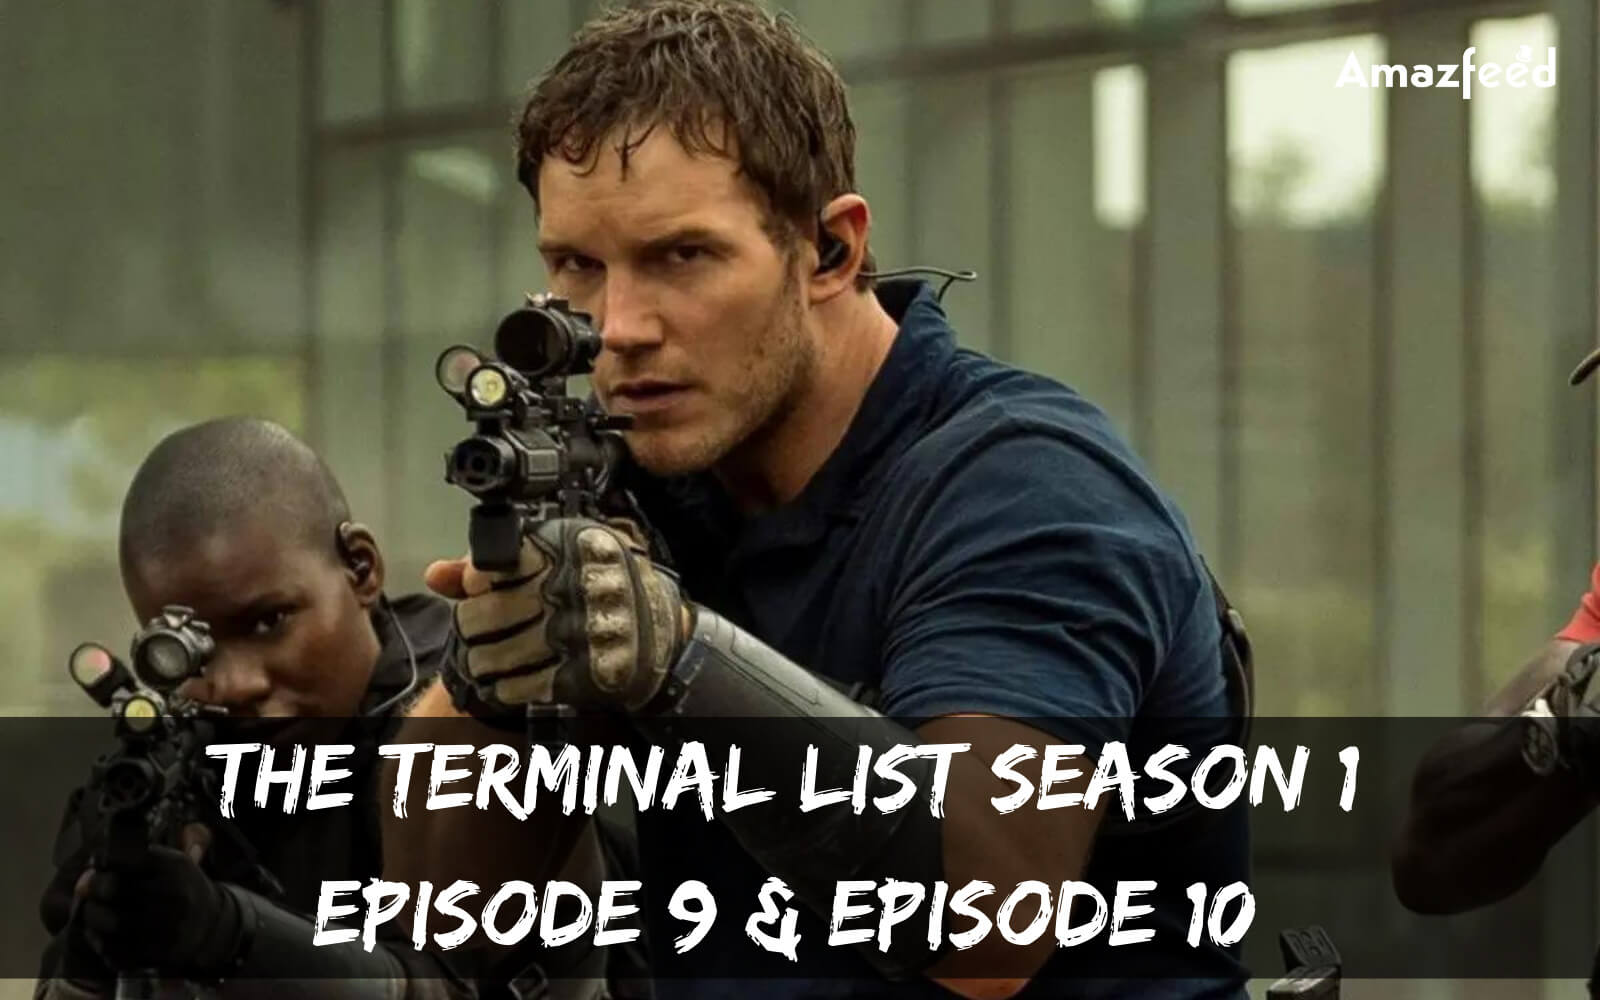 The Terminal List season 1 episode 9 release dateThe Terminal List season 1 episode 9 release date